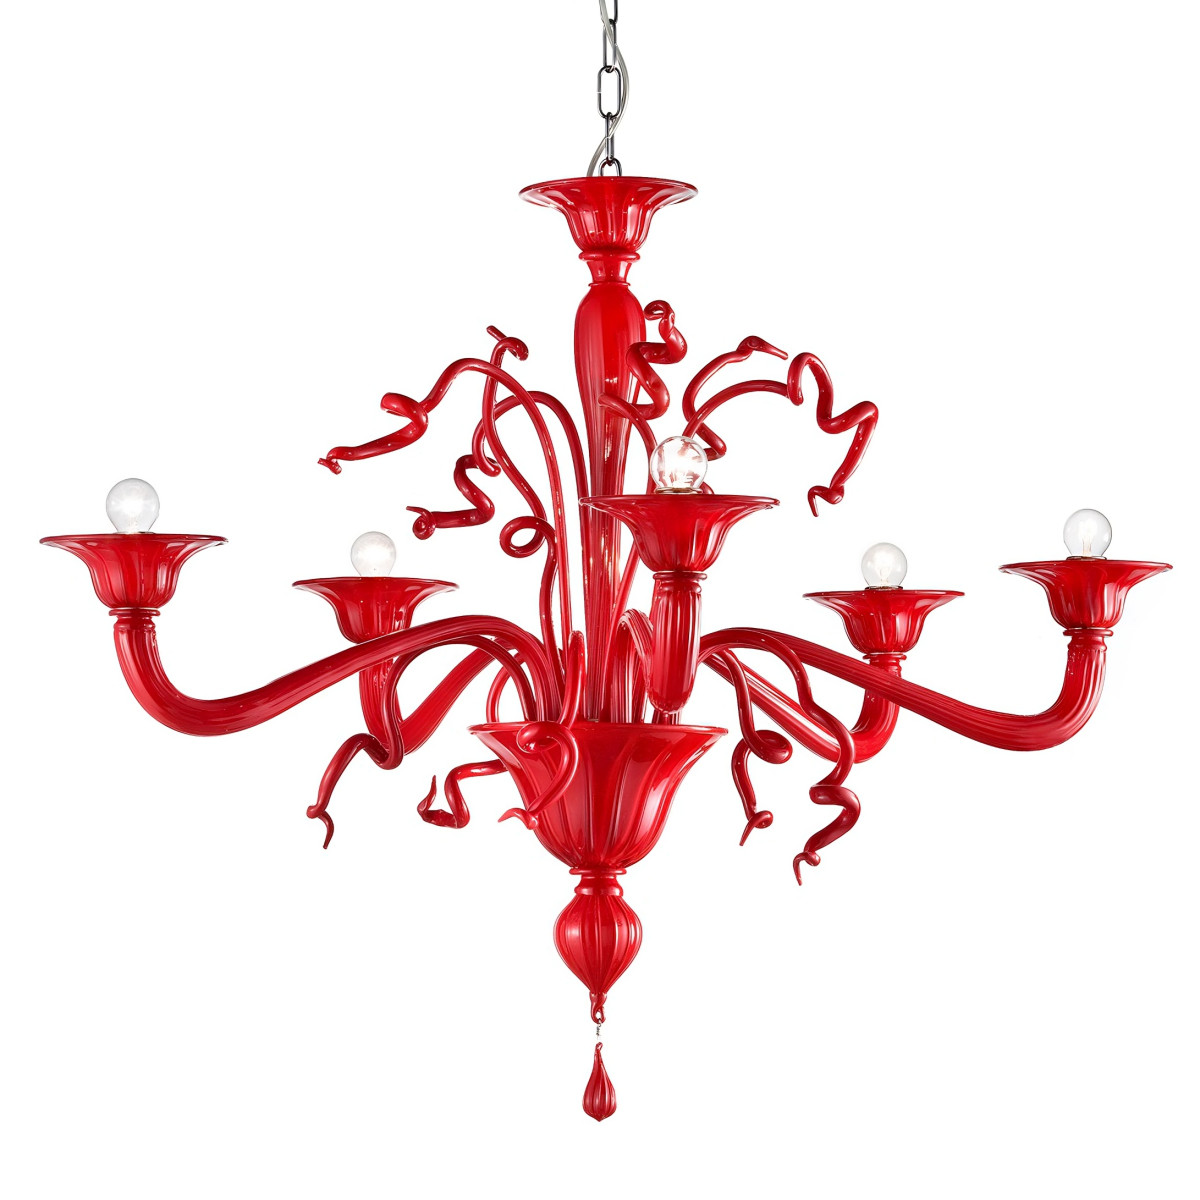 Foscari 6 lights Murano chandelier - red coral color